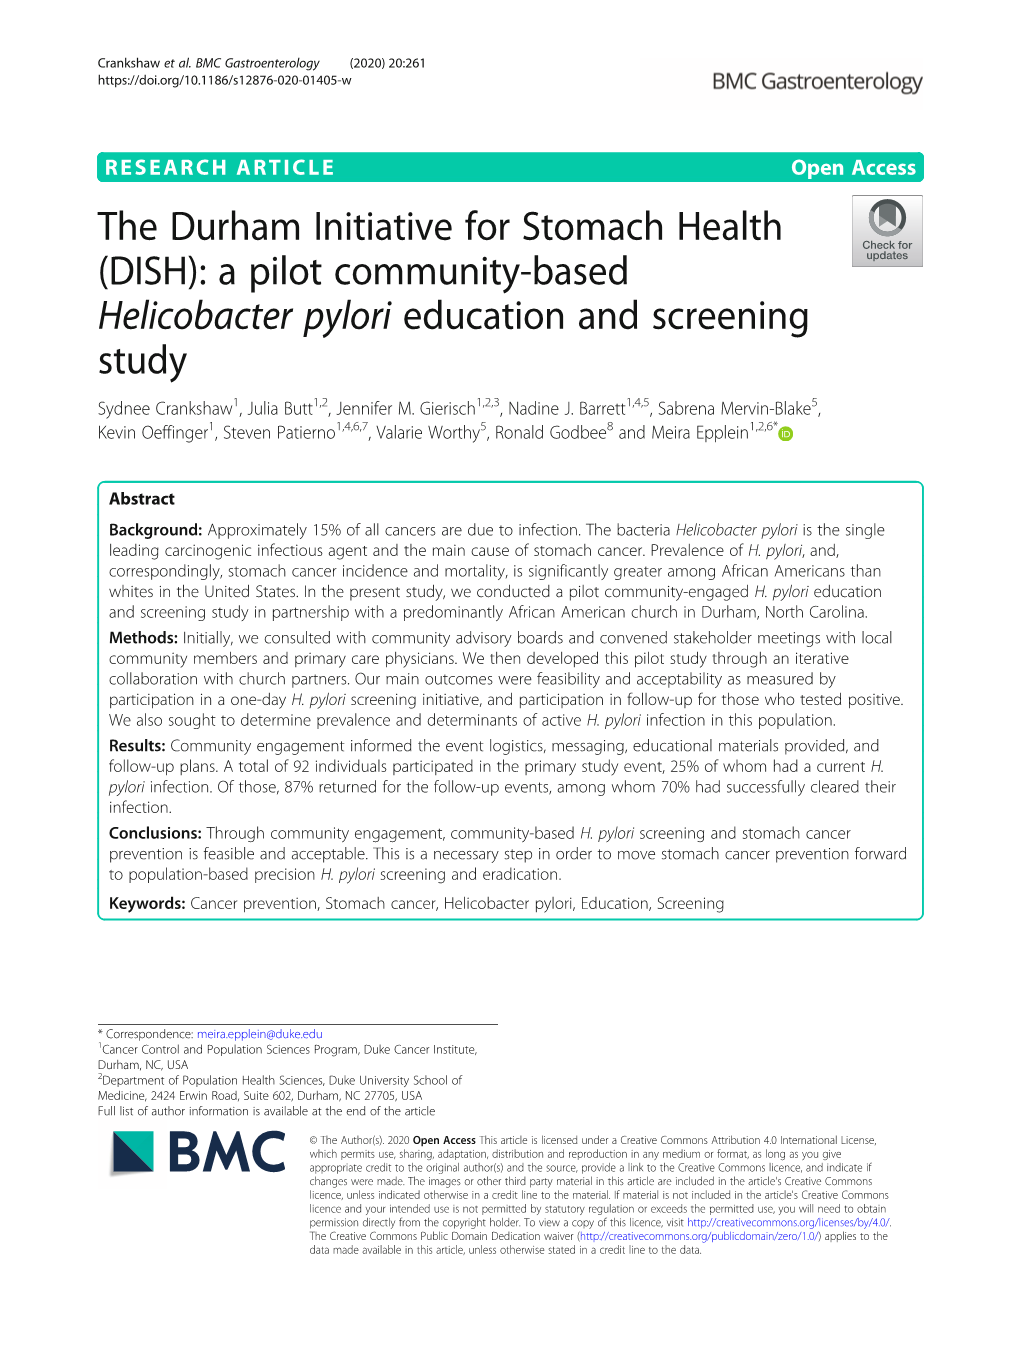 Helicobacter Pylori Education and Screening Study Sydnee Crankshaw1, Julia Butt1,2, Jennifer M